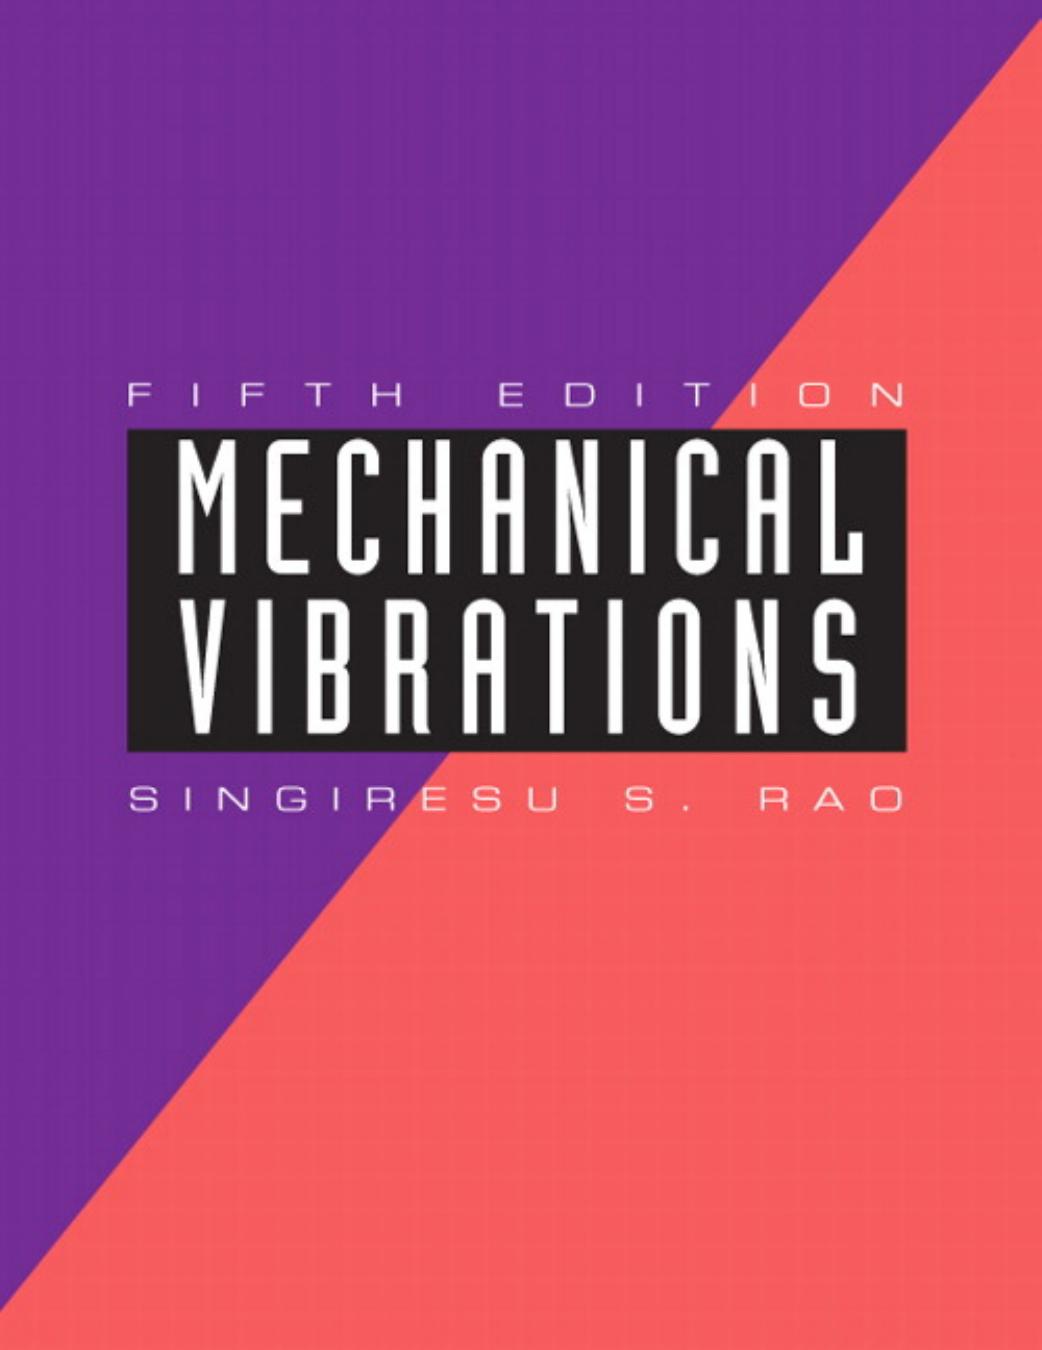 Mechanical Vibrations 5th Edition 2011